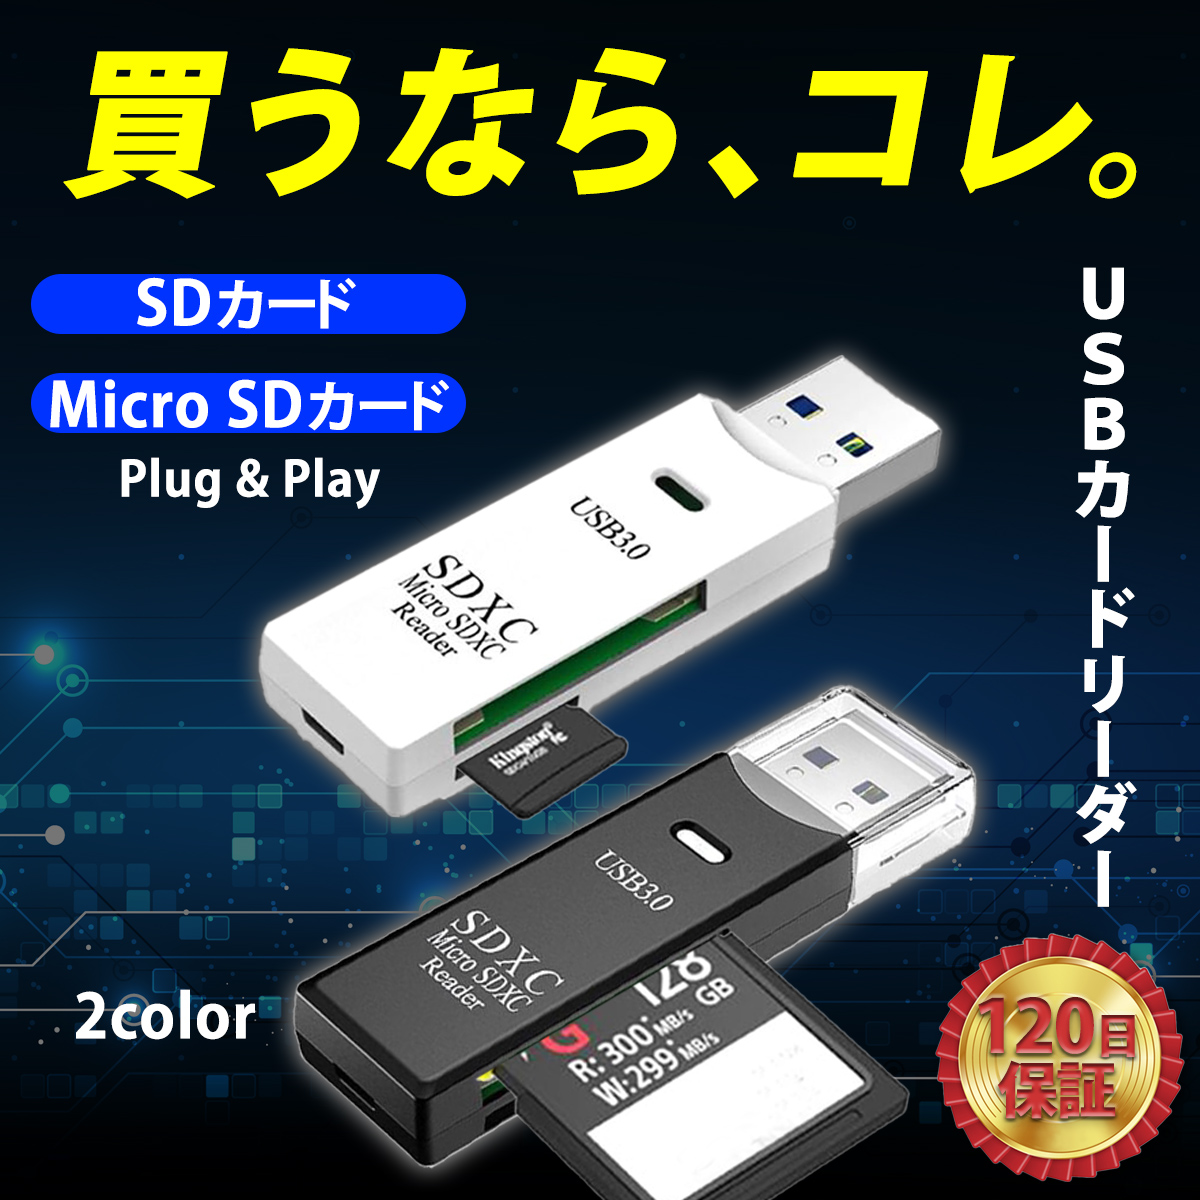 SD card reader card reader USB3.0 multi card reader microSD SDXC SD card micro SD